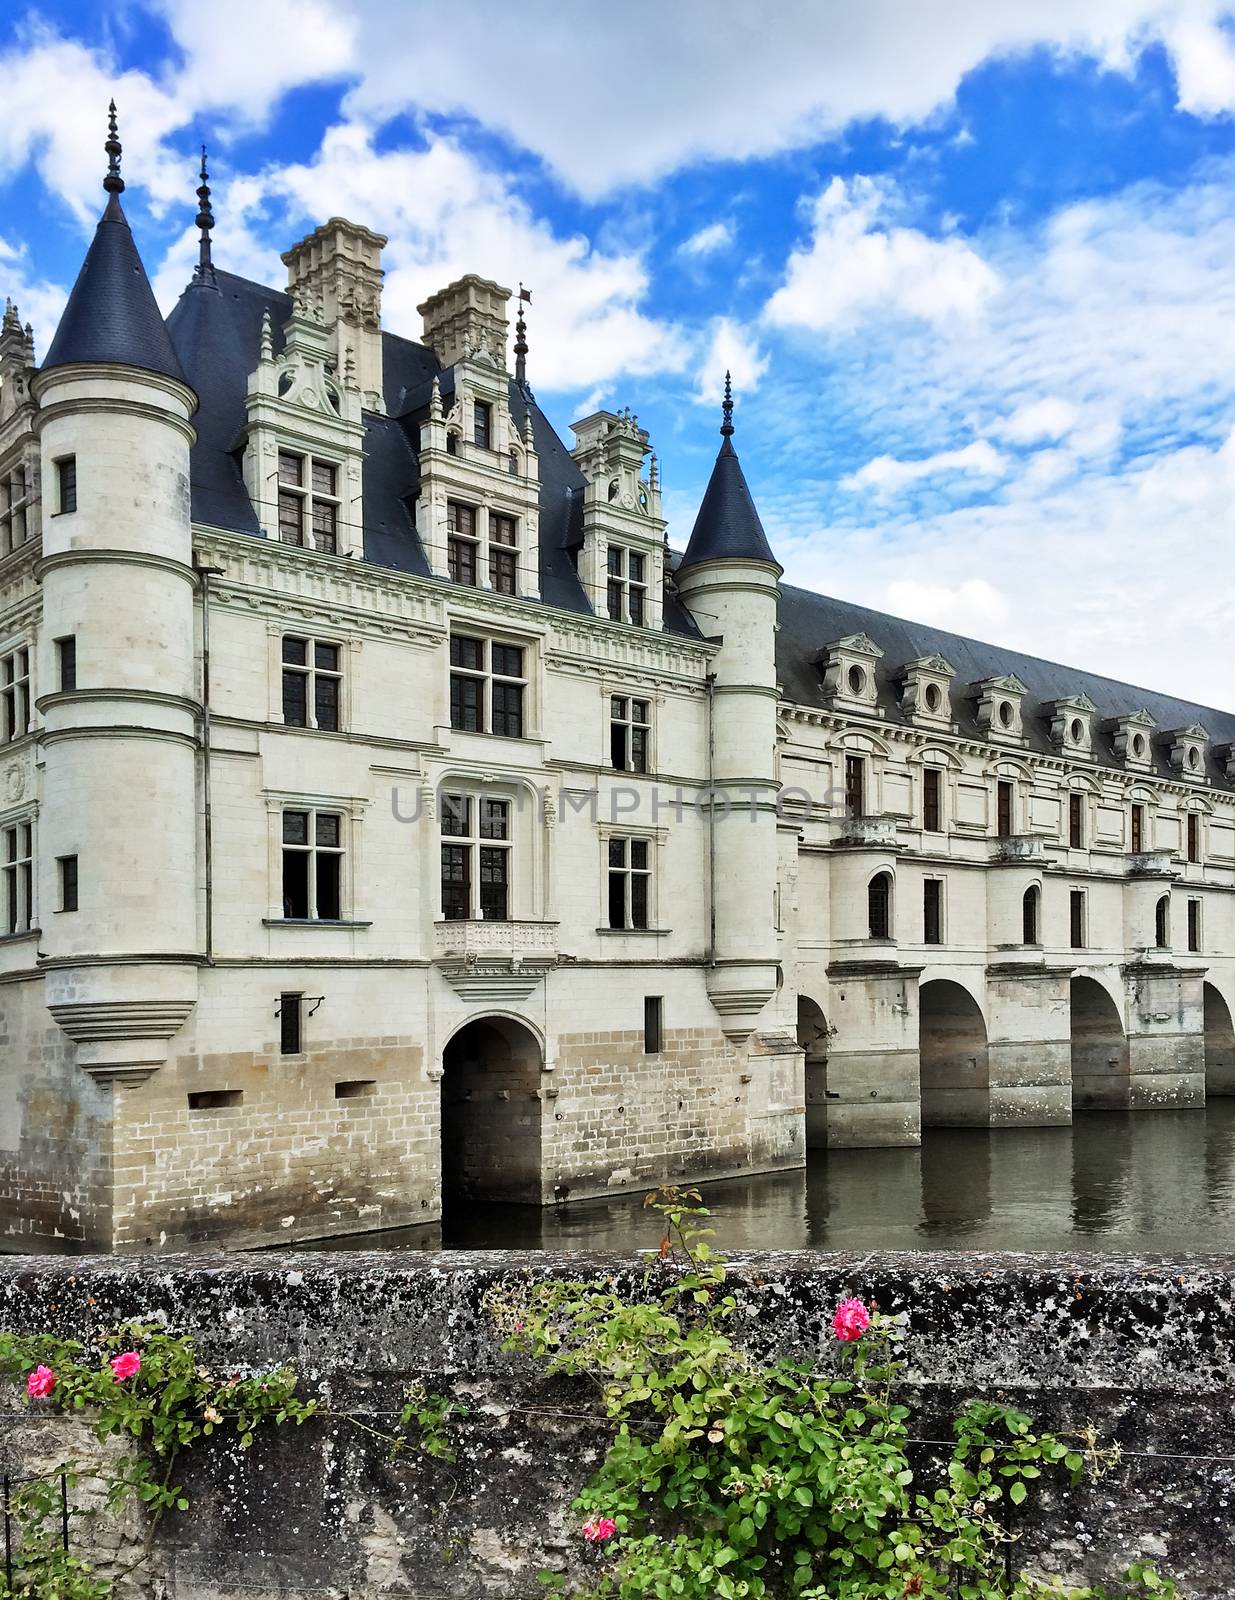 Chateau de Chenonceau, a majestic castle in the Loire Valley, France.